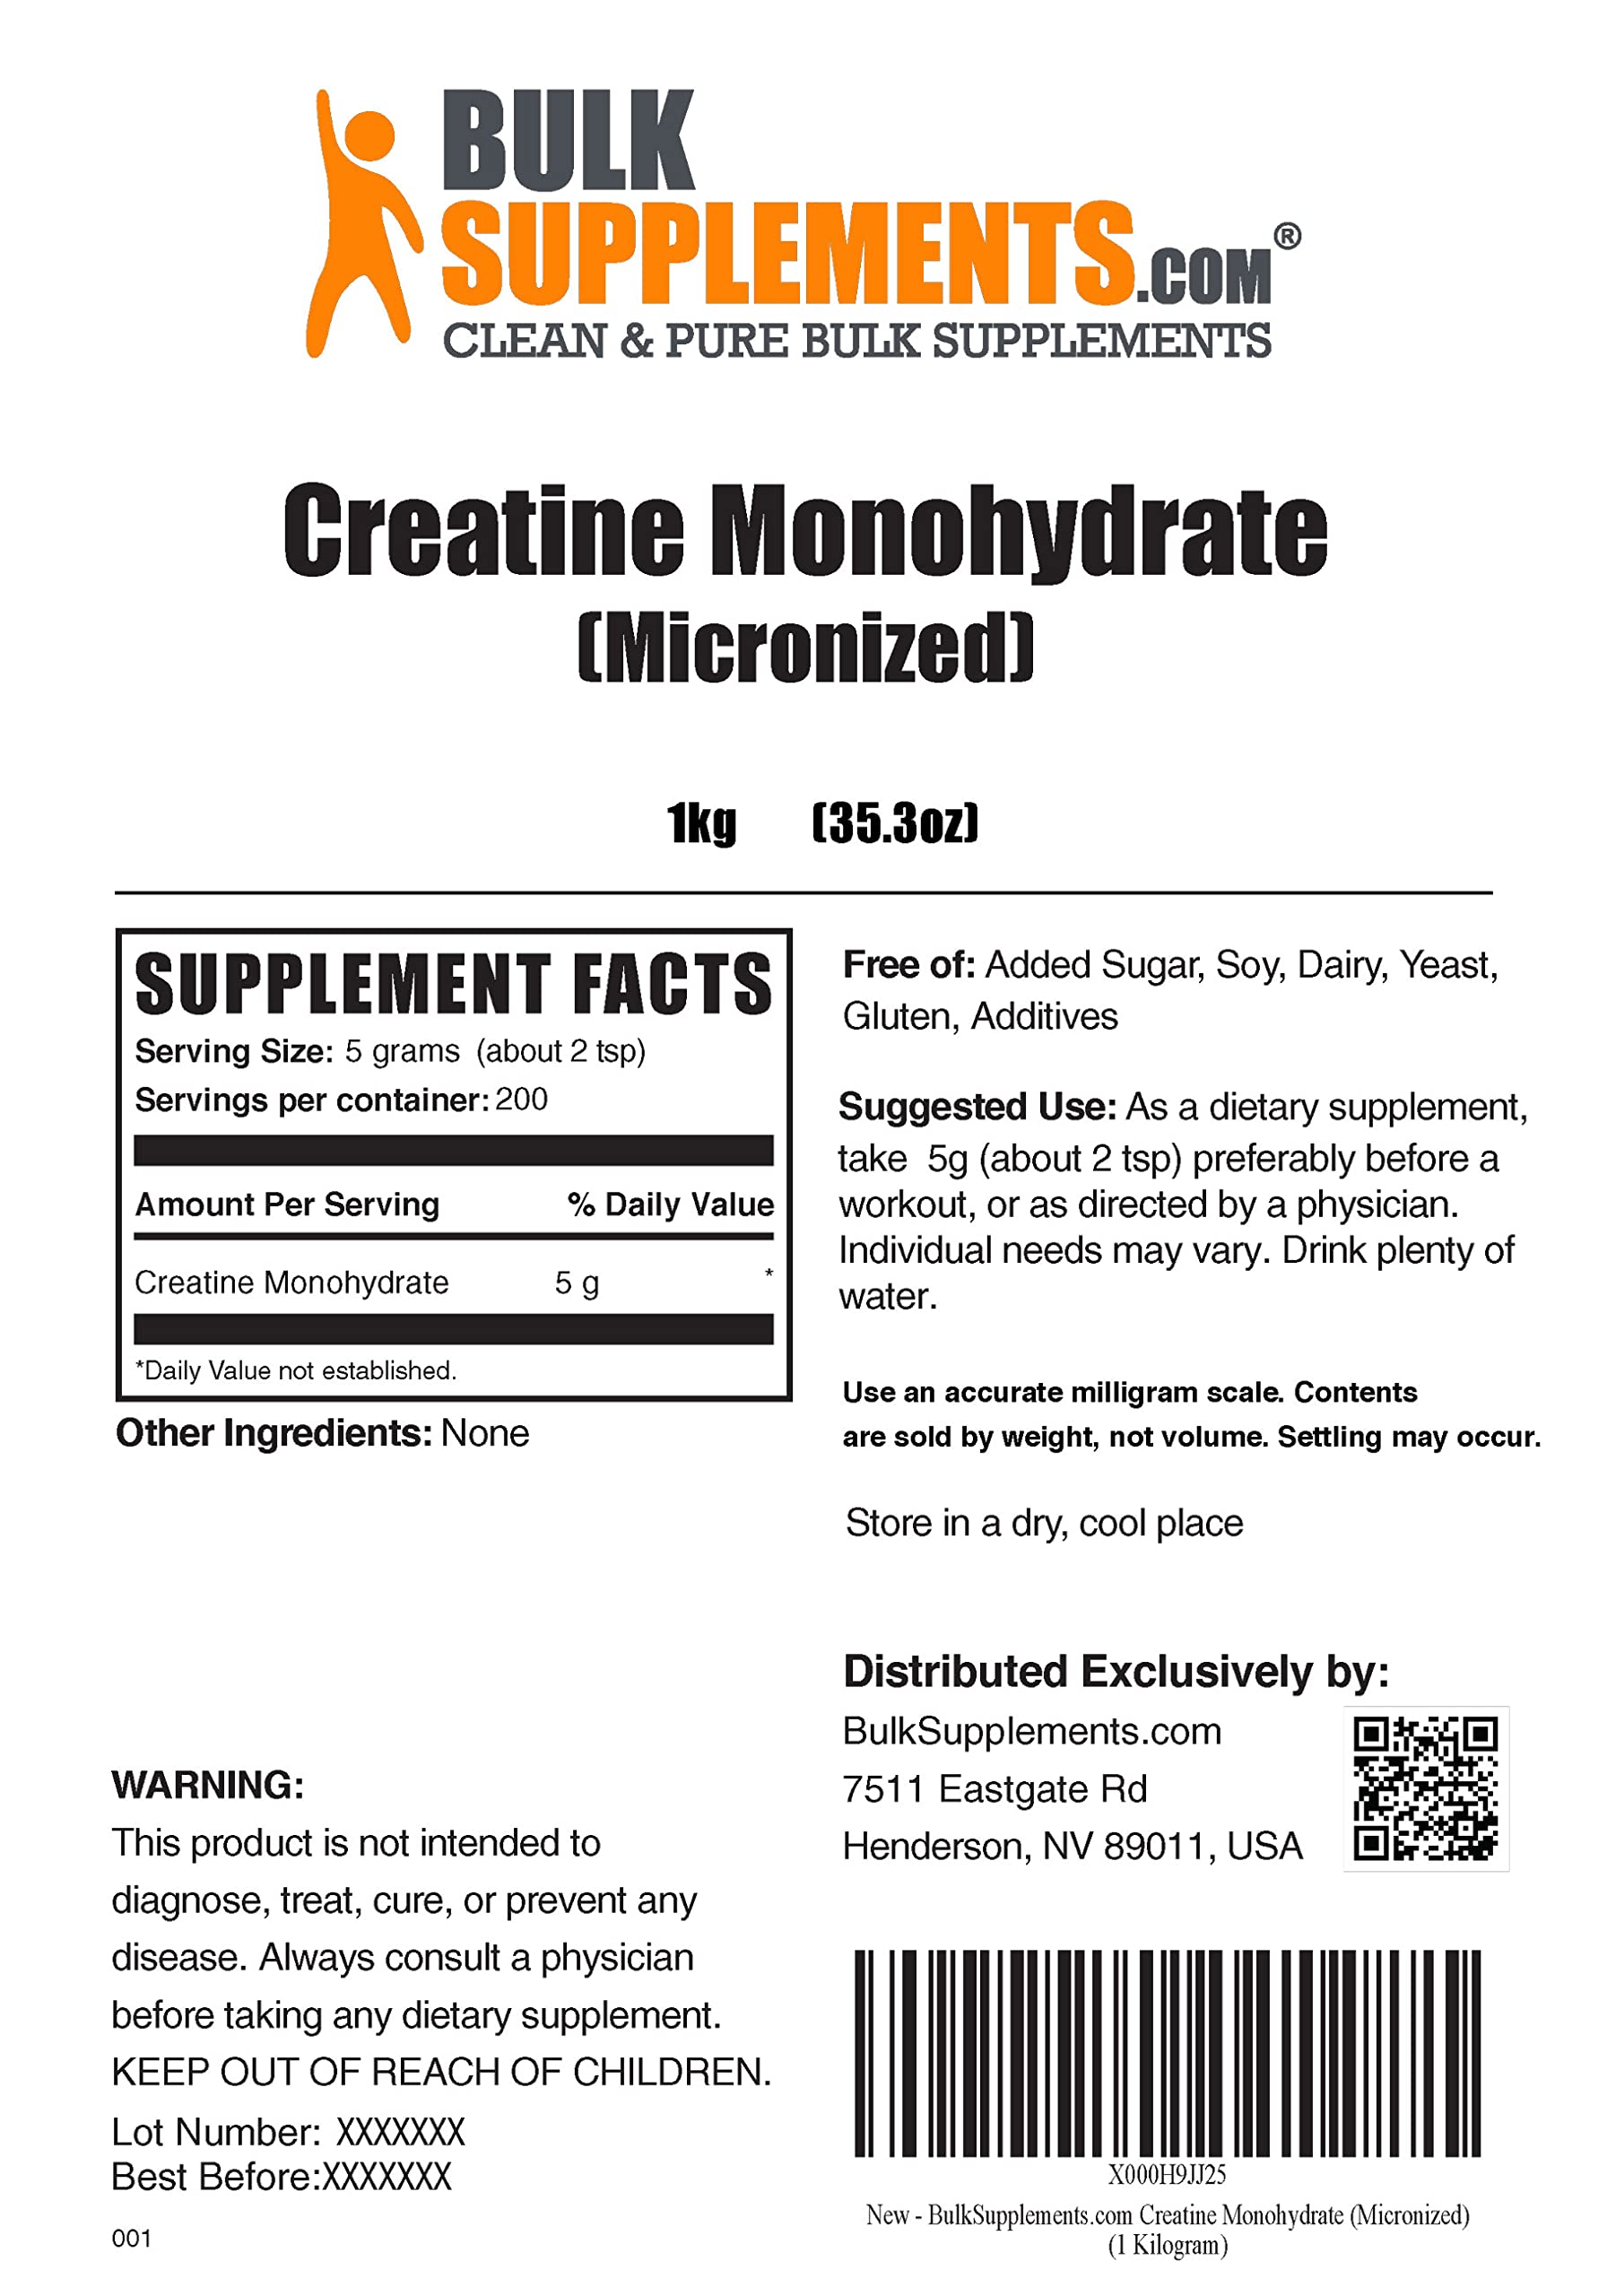 BULKSUPPLEMENTS.COM Creatine Monohydrate 1KG & L-Glutamine 1KG